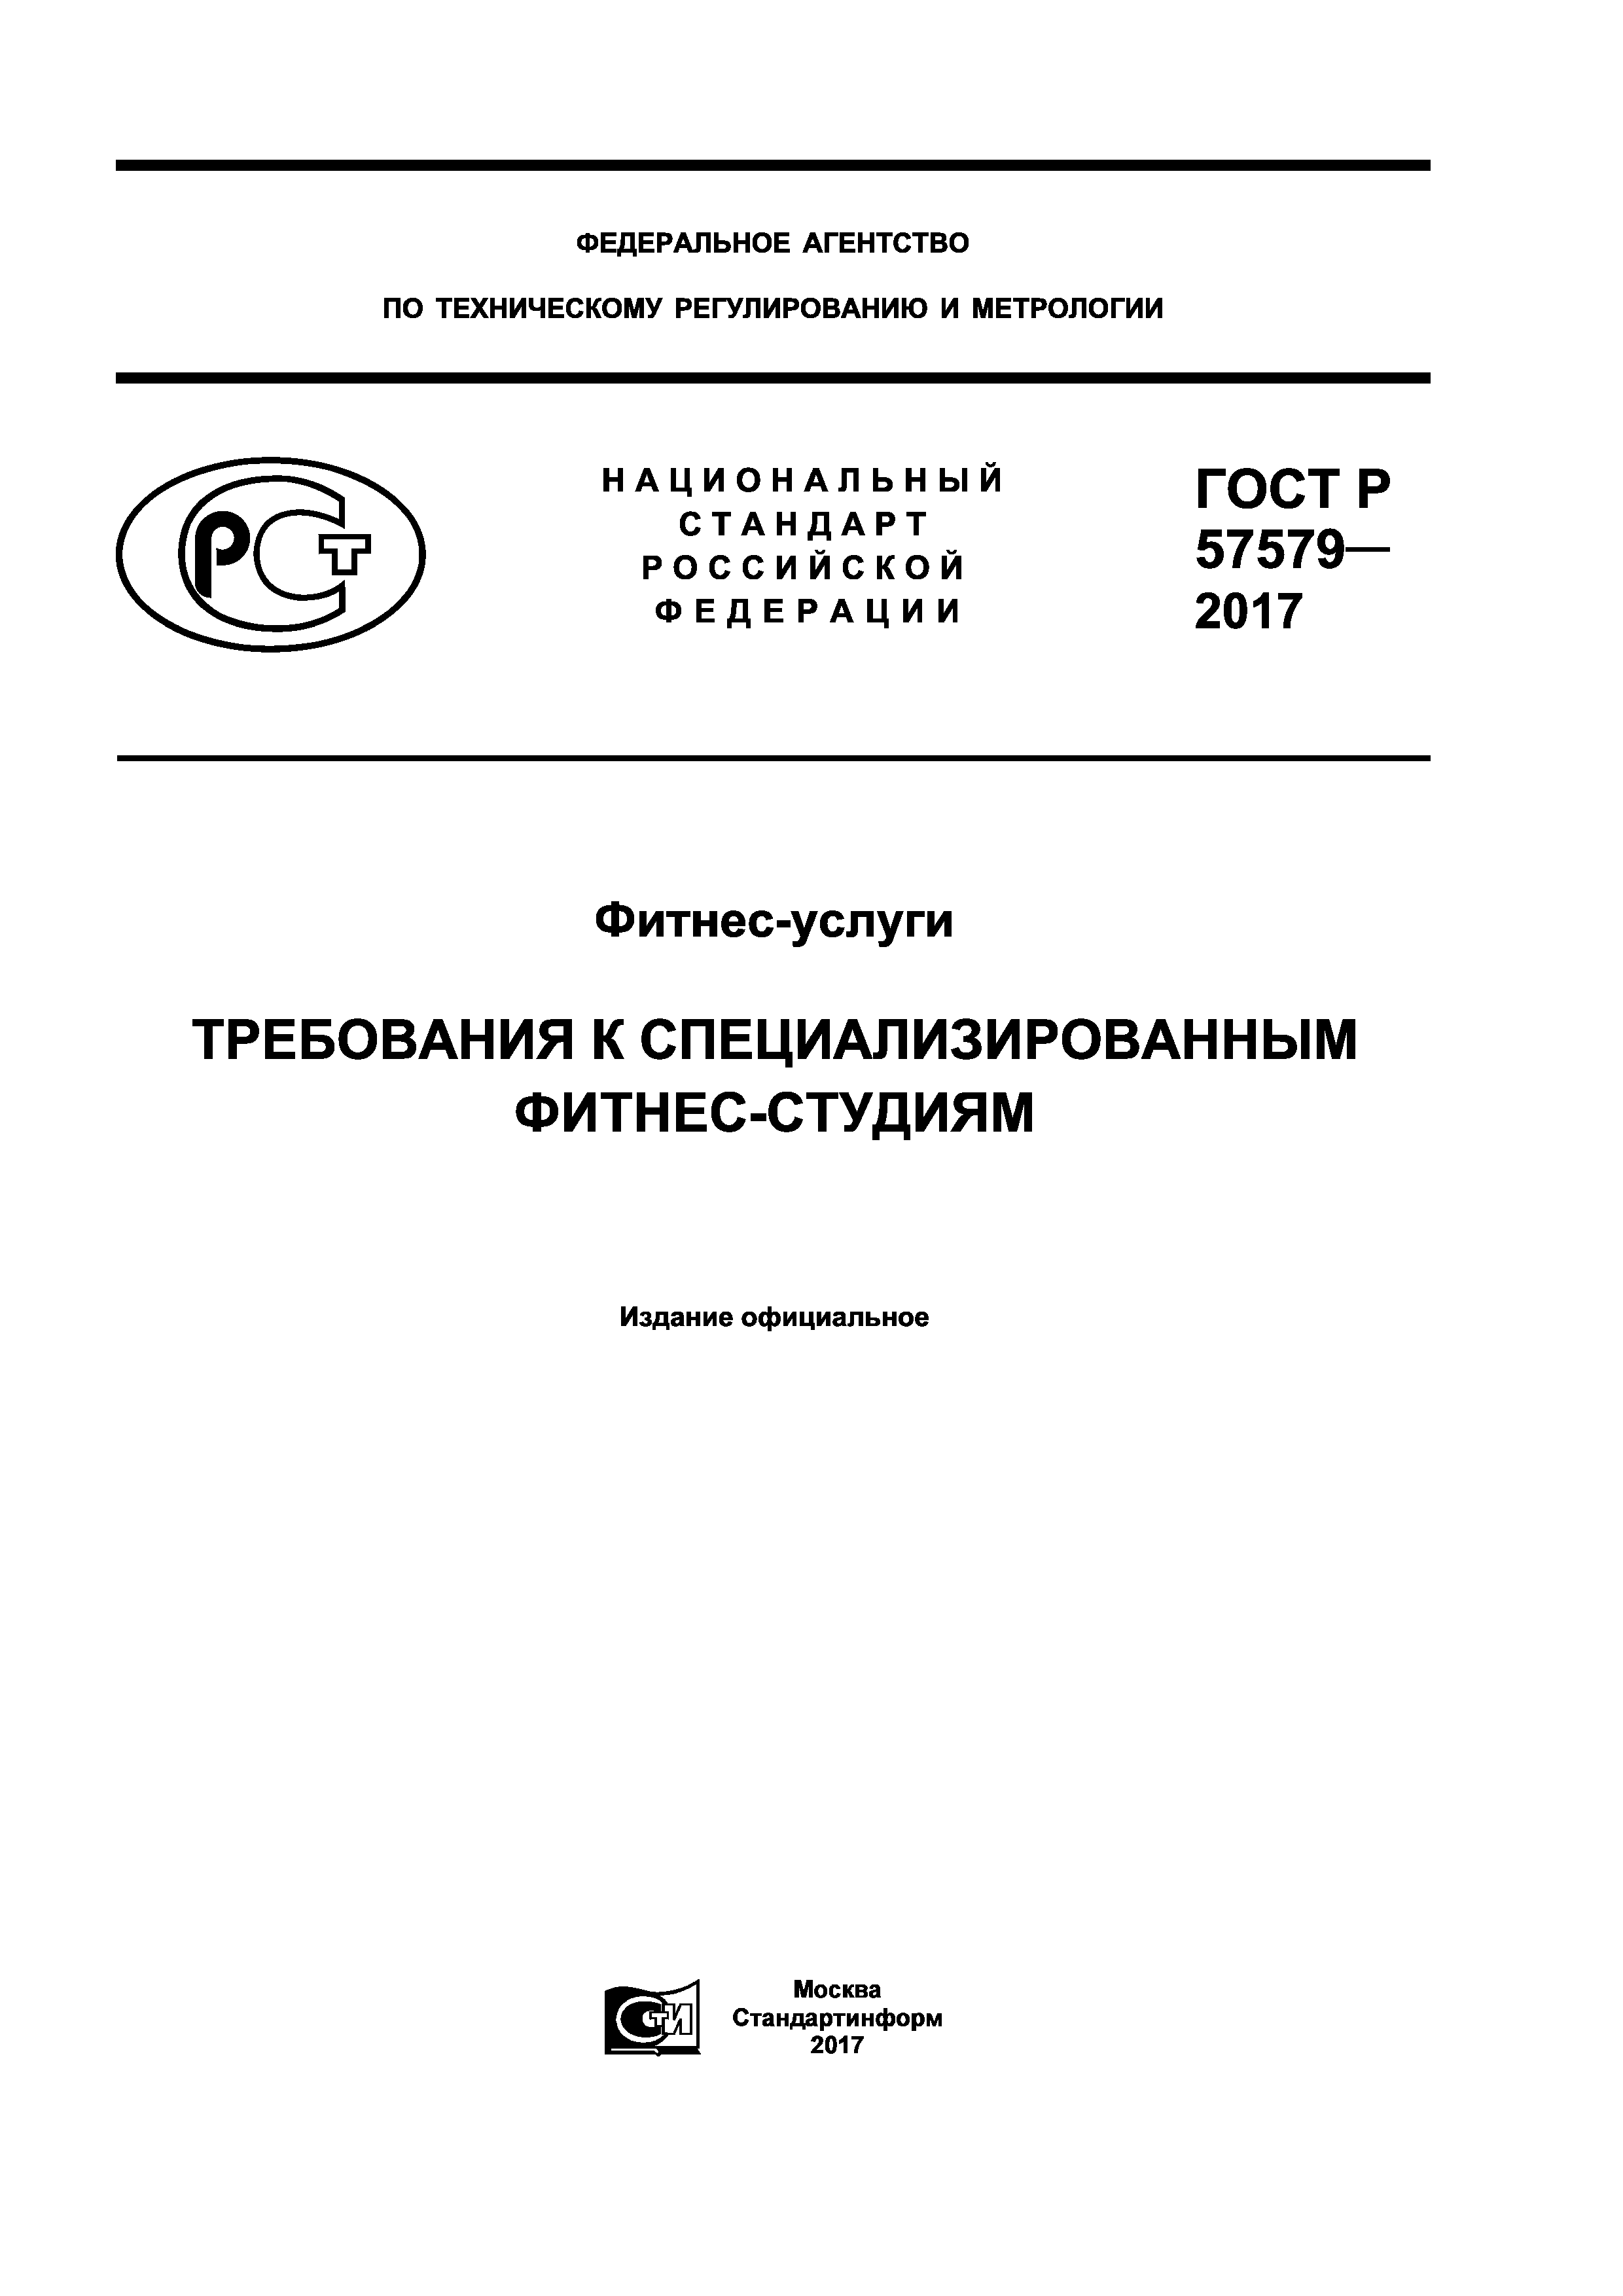 ГОСТ Р 57579-2017